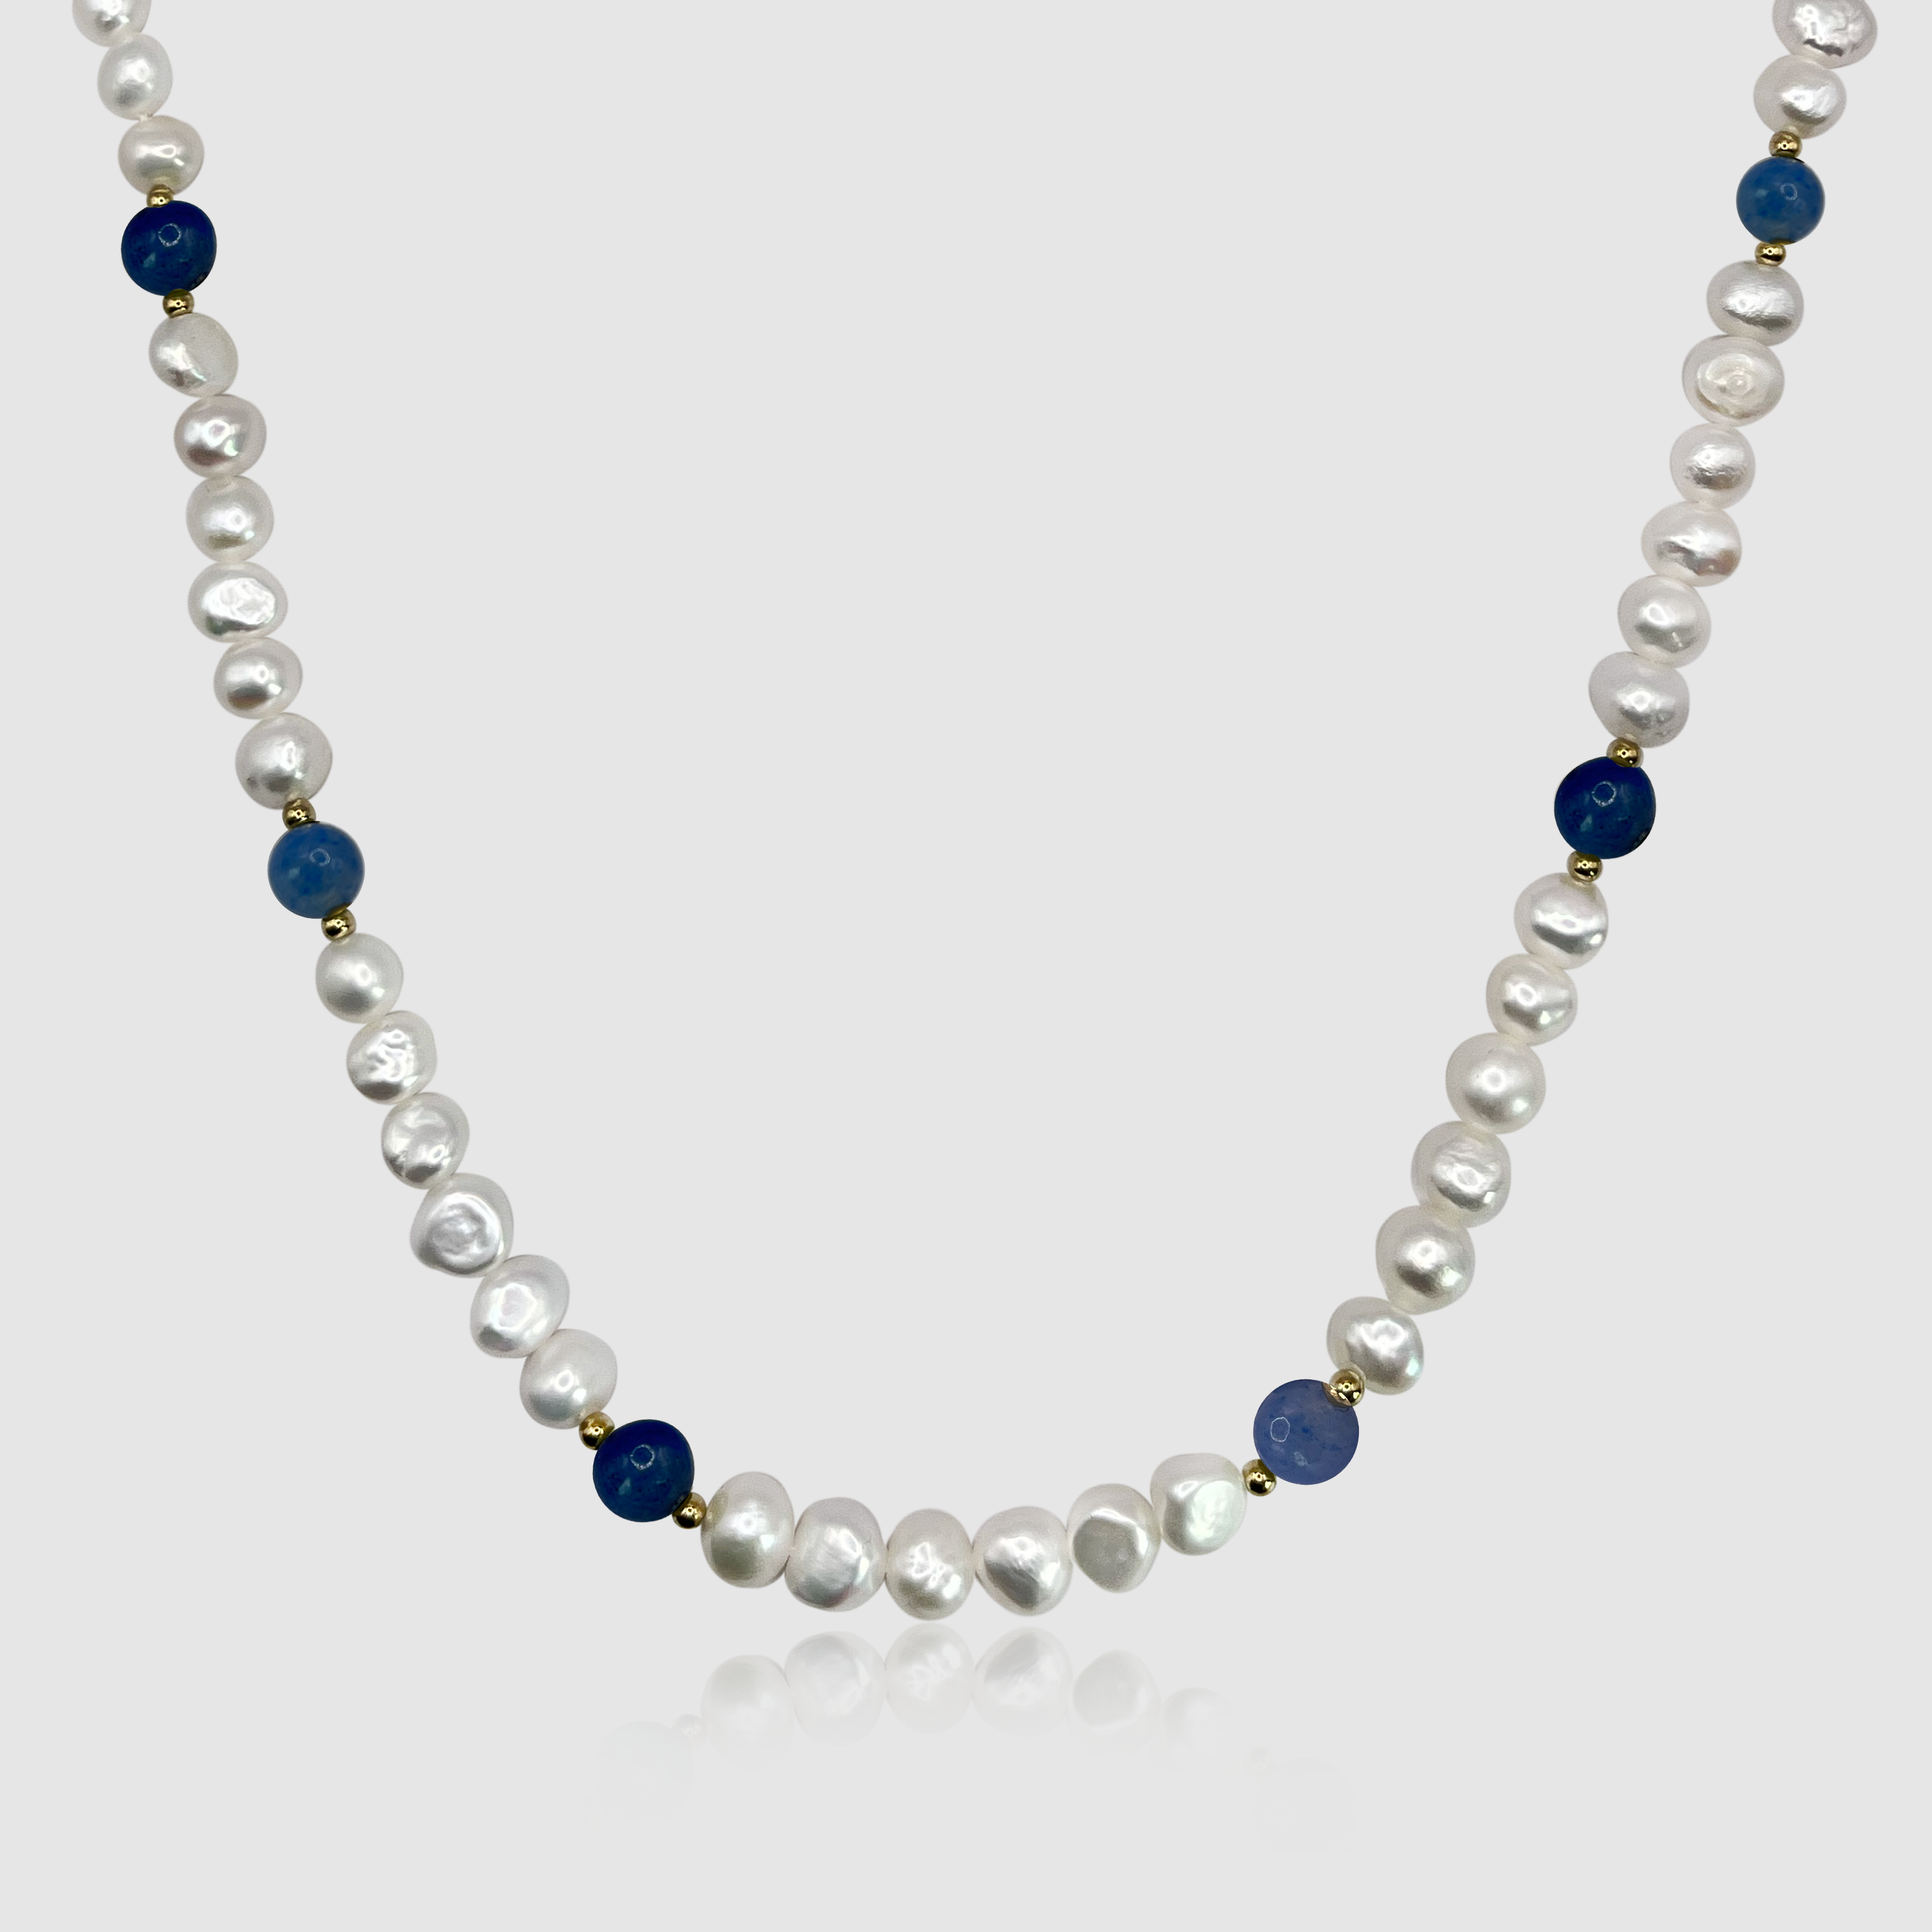 Kobaltblau - Echte Perlenkette